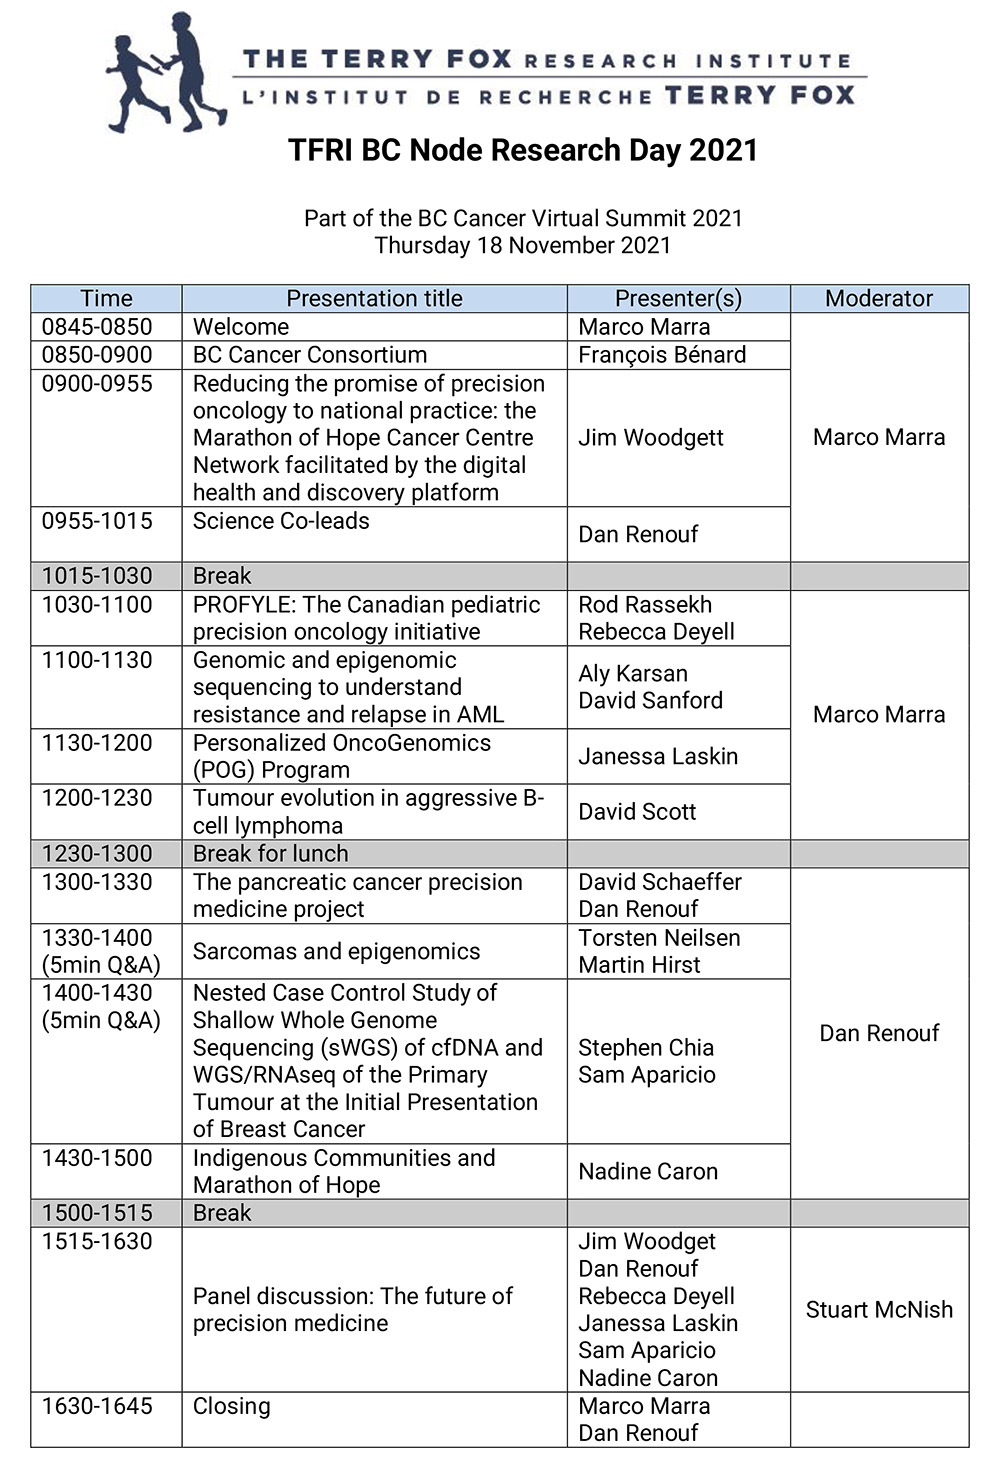 TFRI BC Node Research Day 2021 agenda